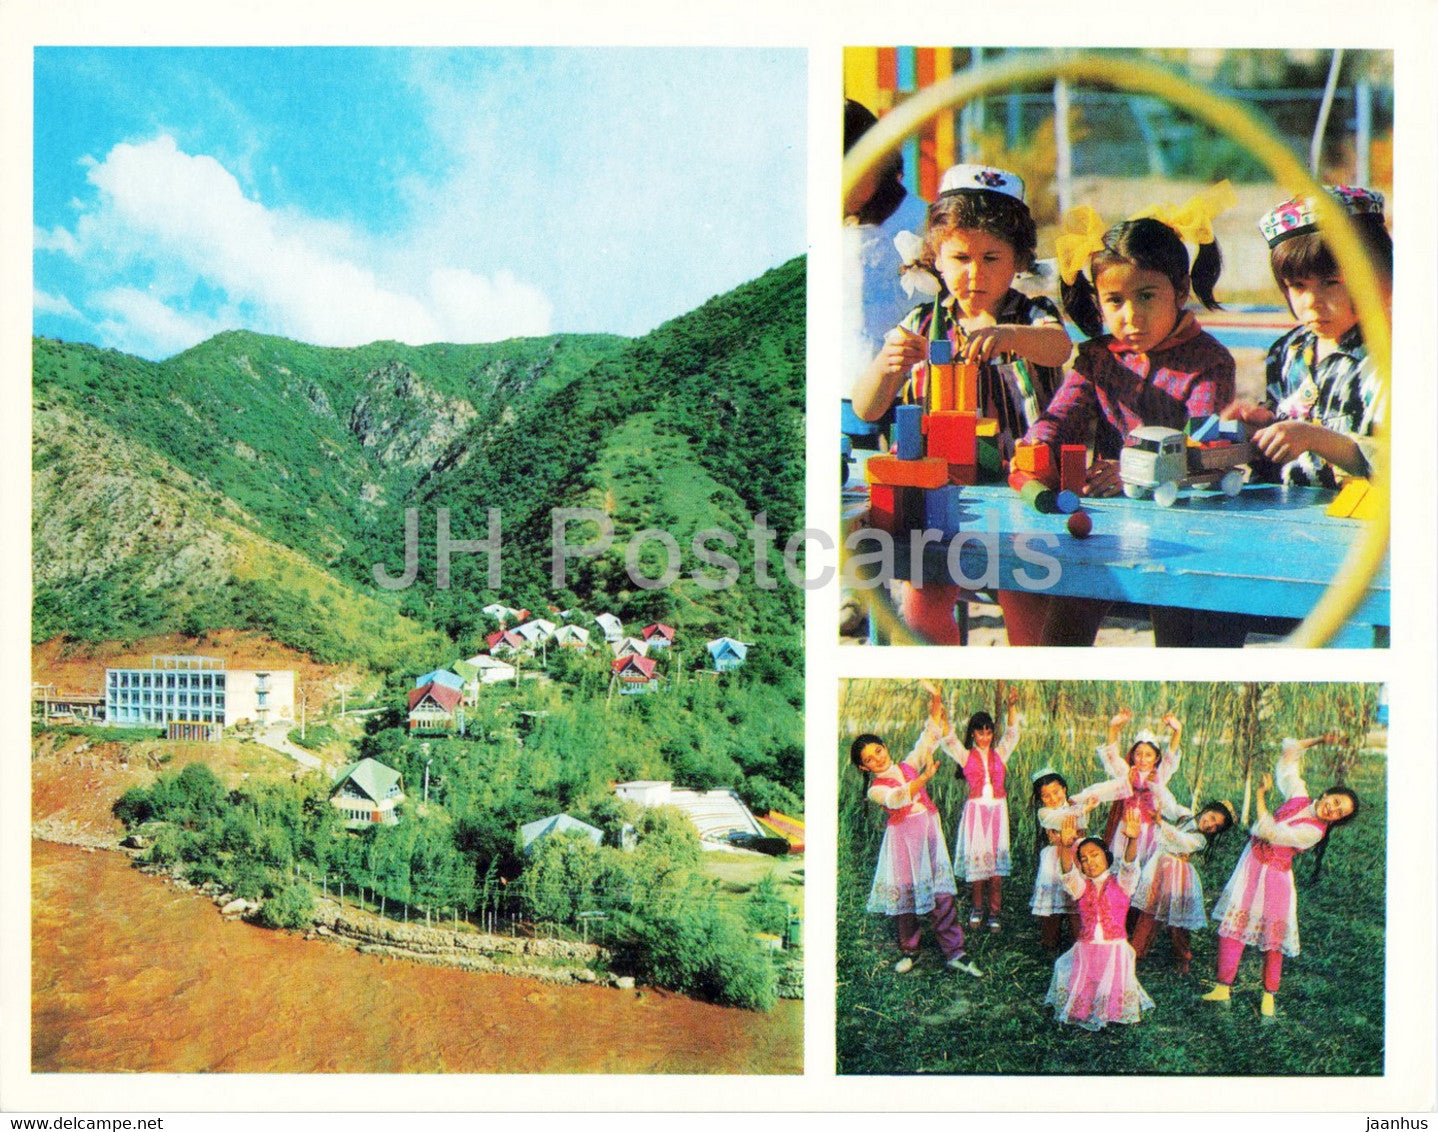 Dushanbe - Mountain Tale Young Pioneers camp in the Ramitskoye Gorge - children - 1974 - Tajikistan USSR - unused - JH Postcards